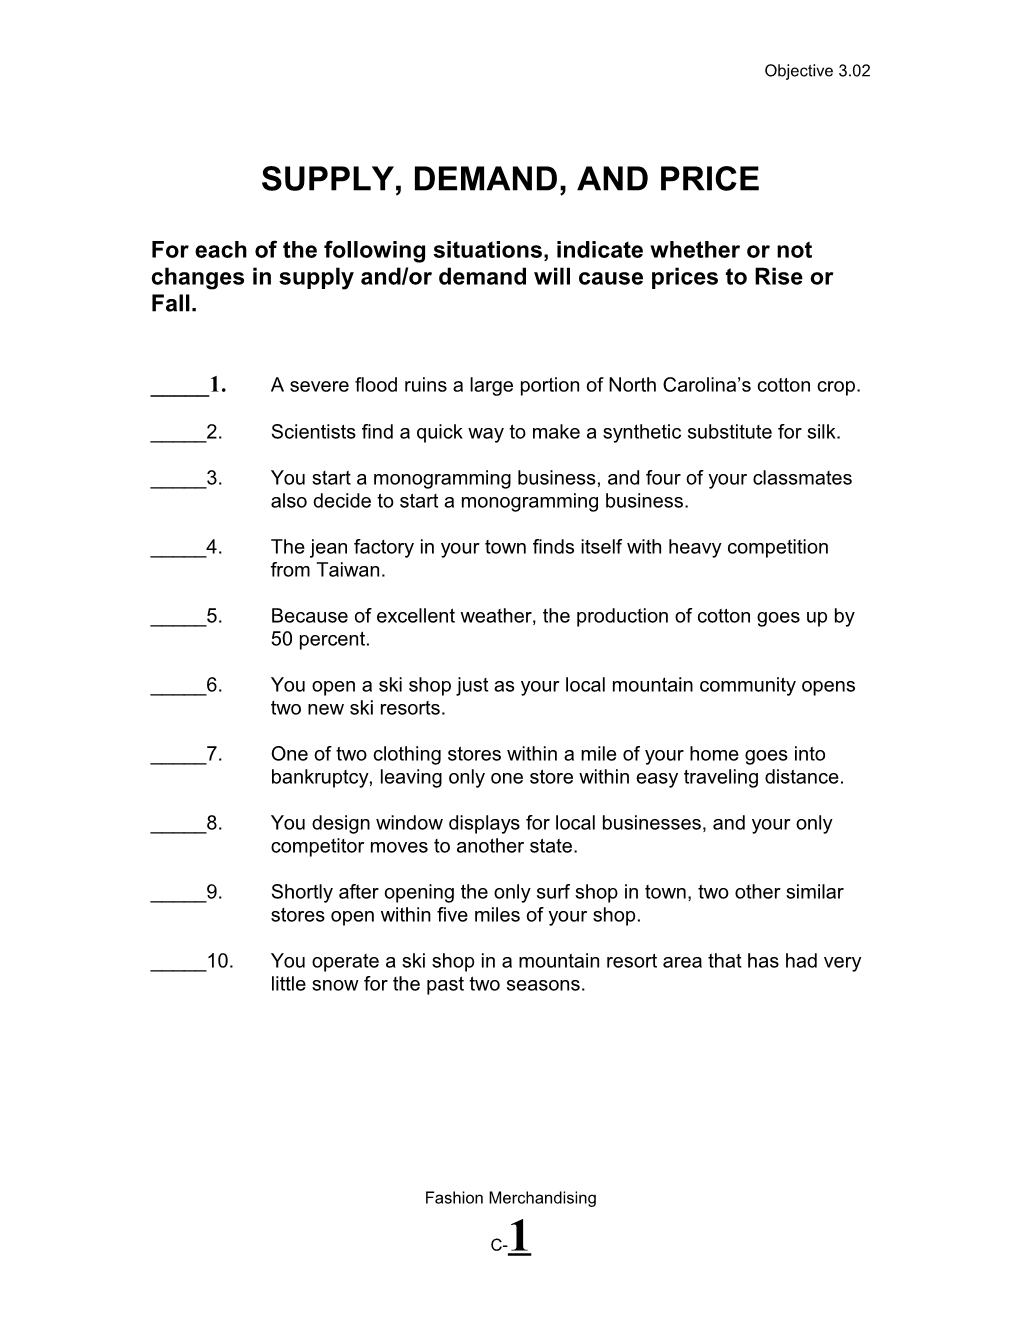 Supply, Demand, and Price